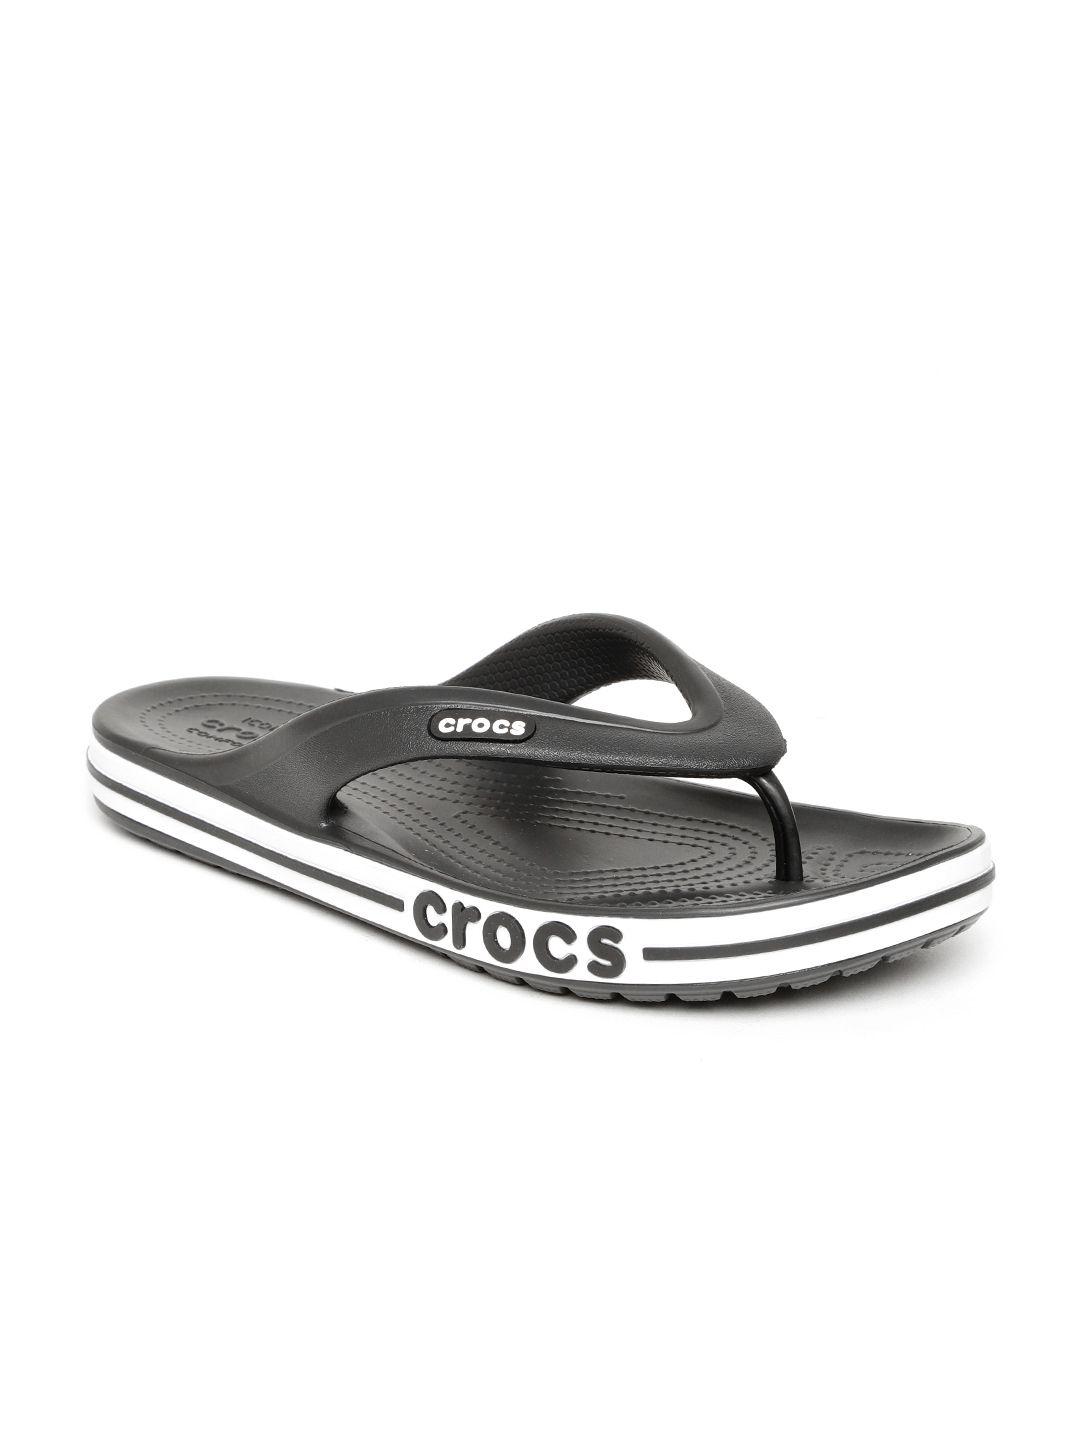 crocs unisex black solid thong flip-flops